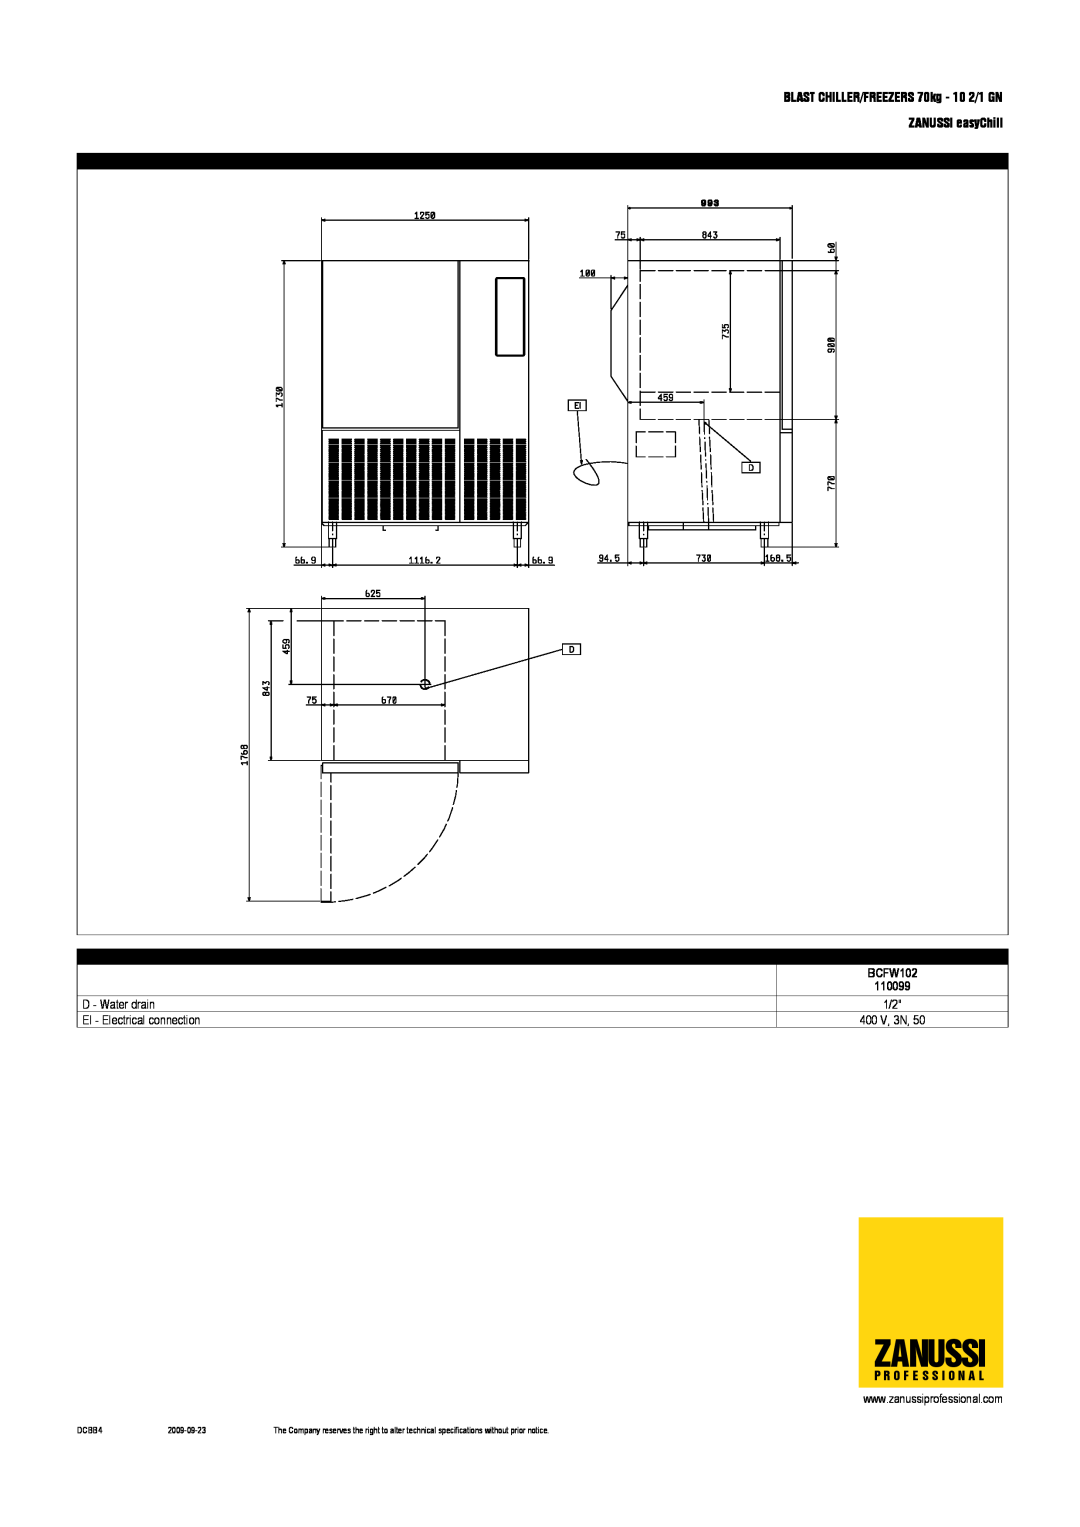 Electrolux dimensions Zanussi, BCFW102 110099, DCBB4, 2009-09-23 